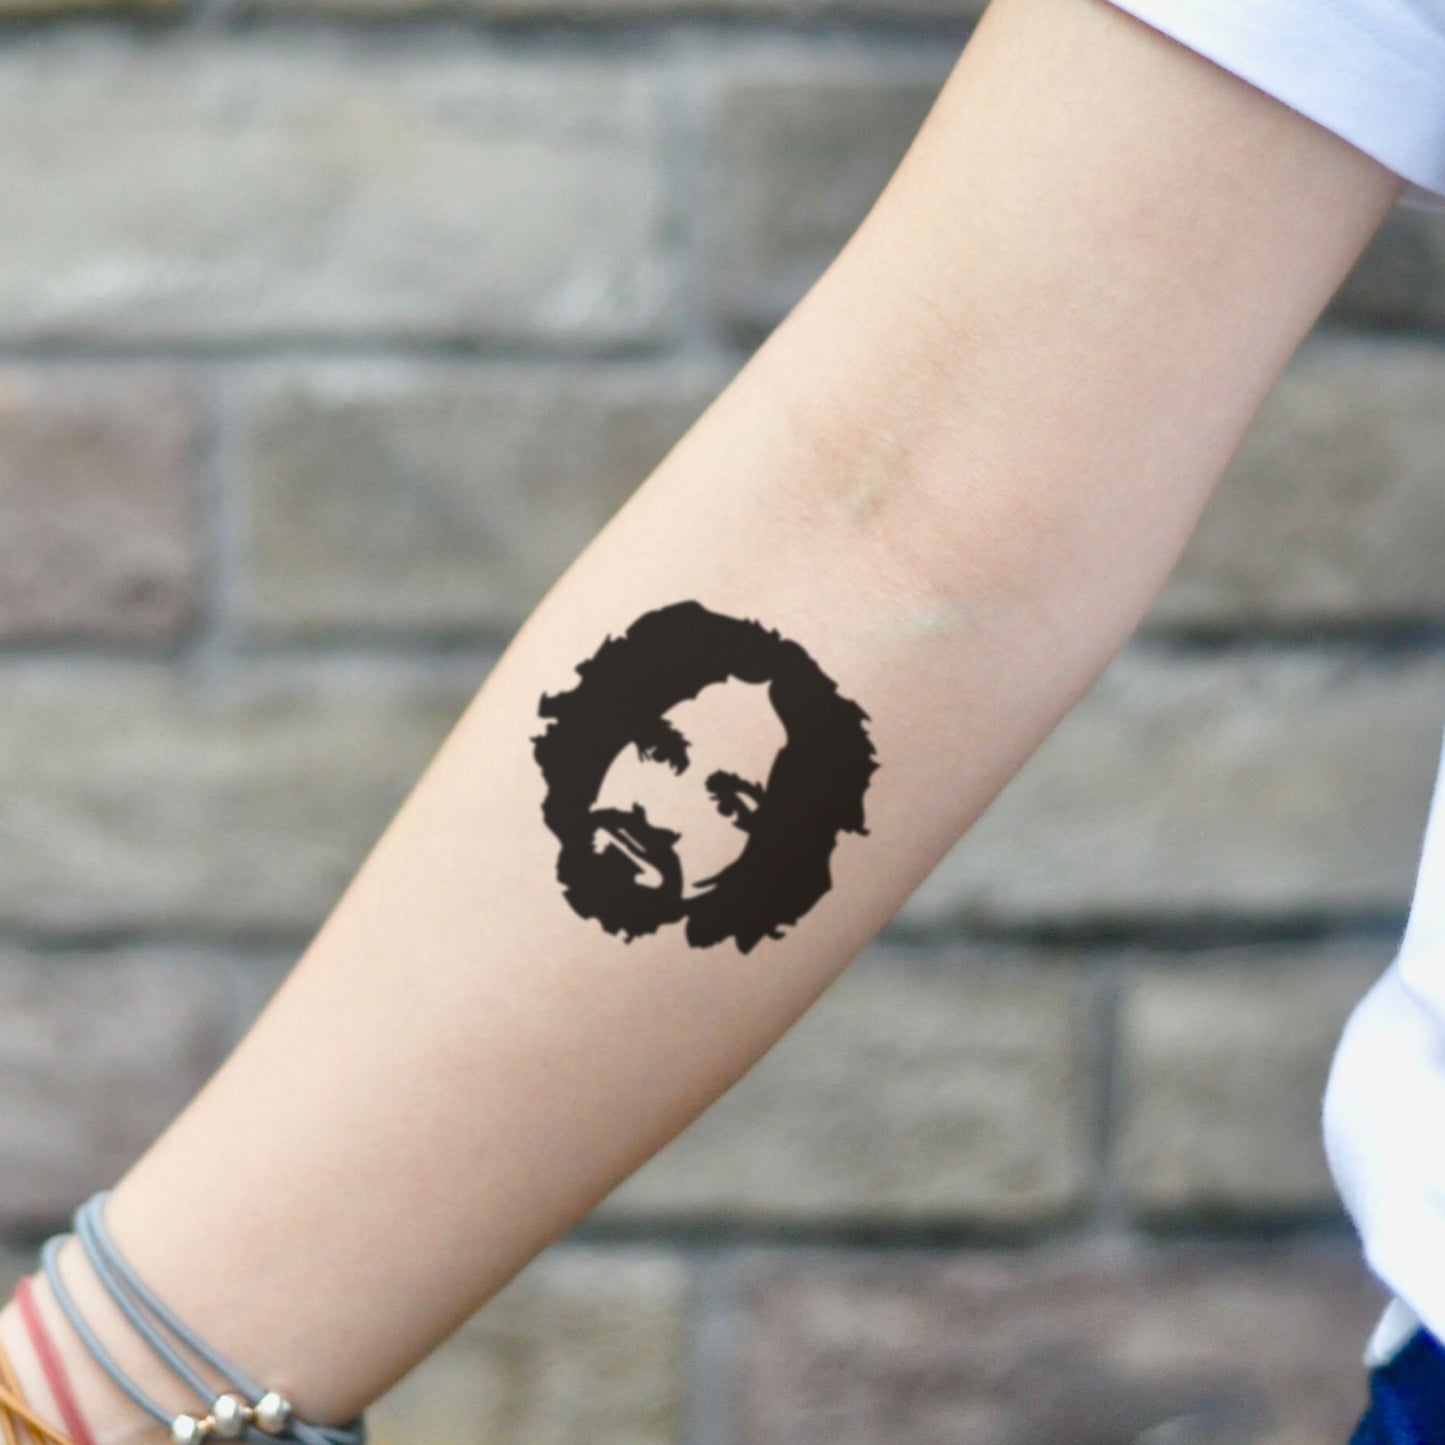 fake small charles manson portrait temporary tattoo sticker design idea on inner arm